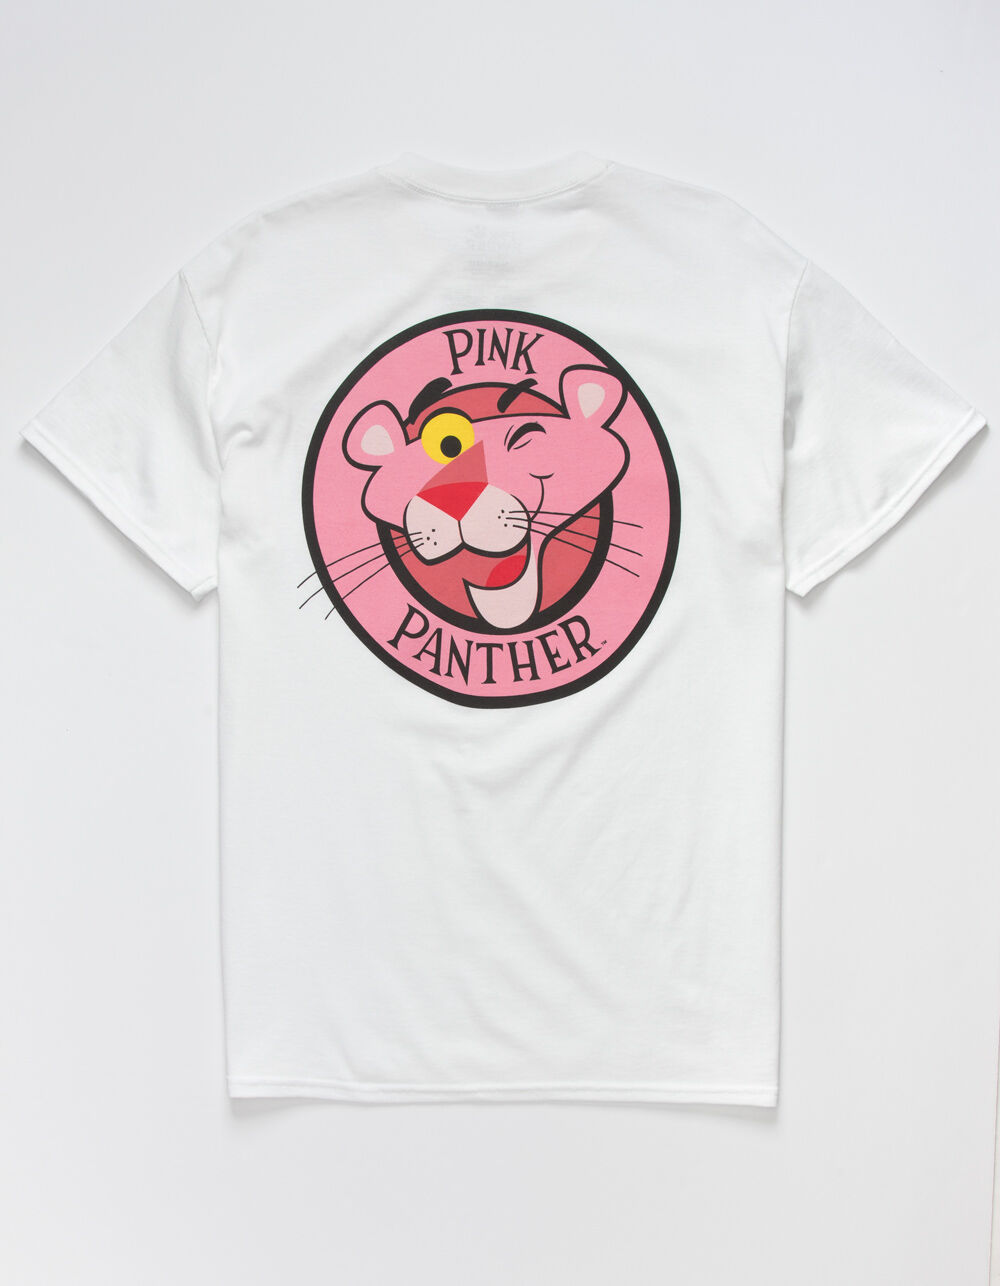 Pink Panther Fanart Face Unisex T-Shirt - Teeruto